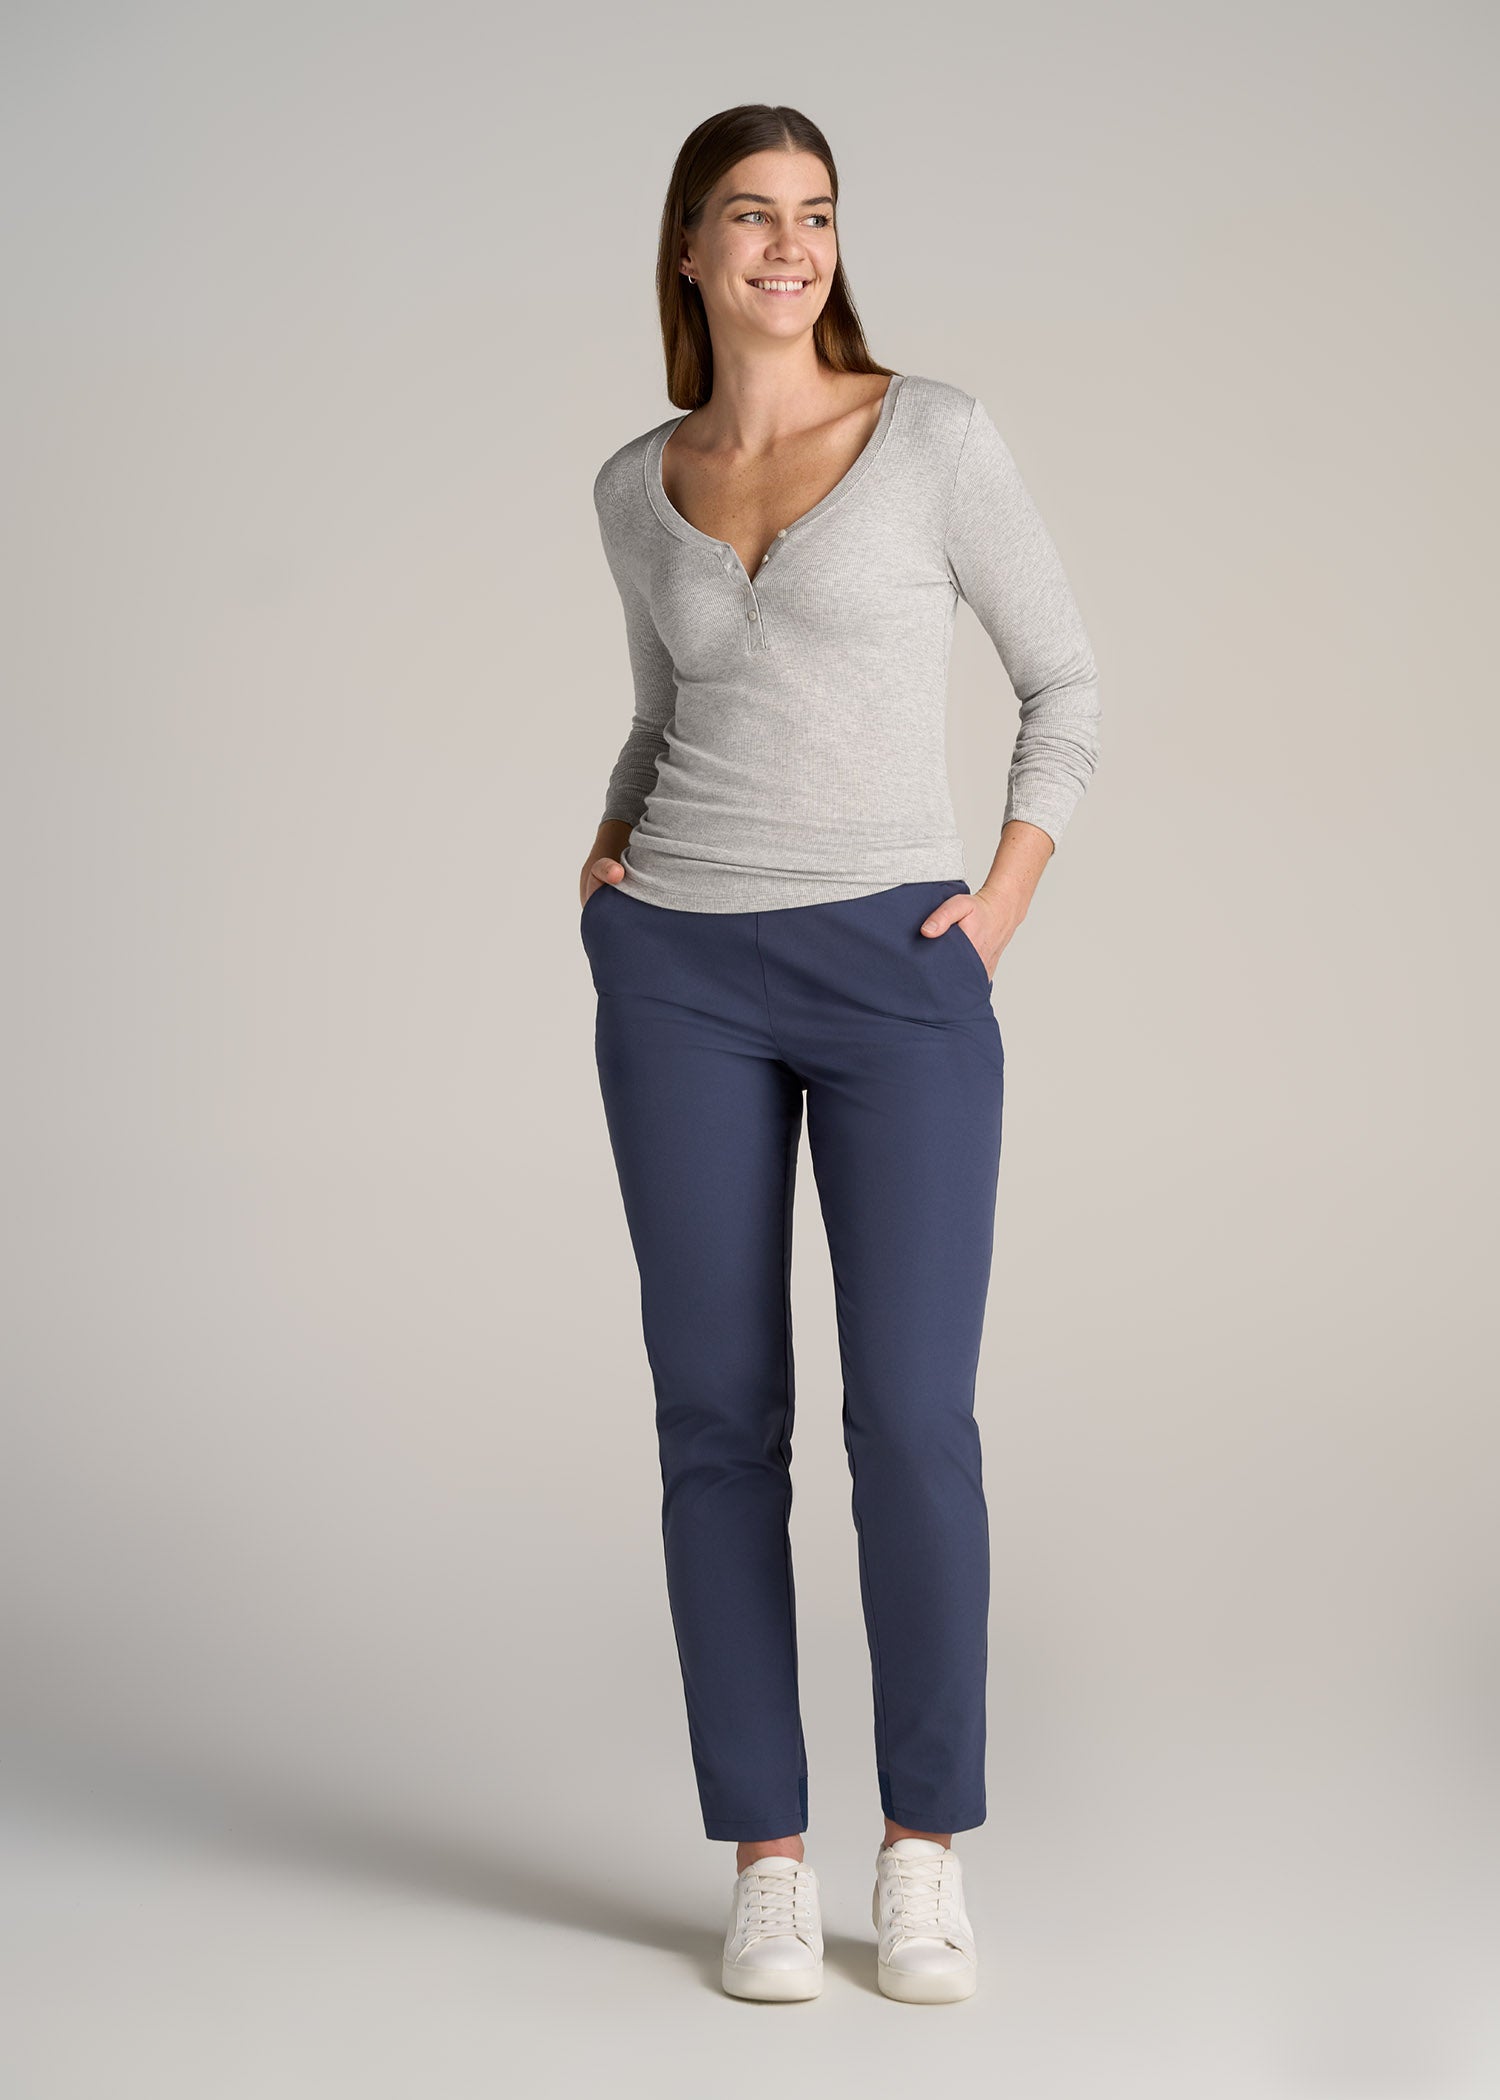 Ribbed Henley - Women's Tall Long Sleeve Shirts